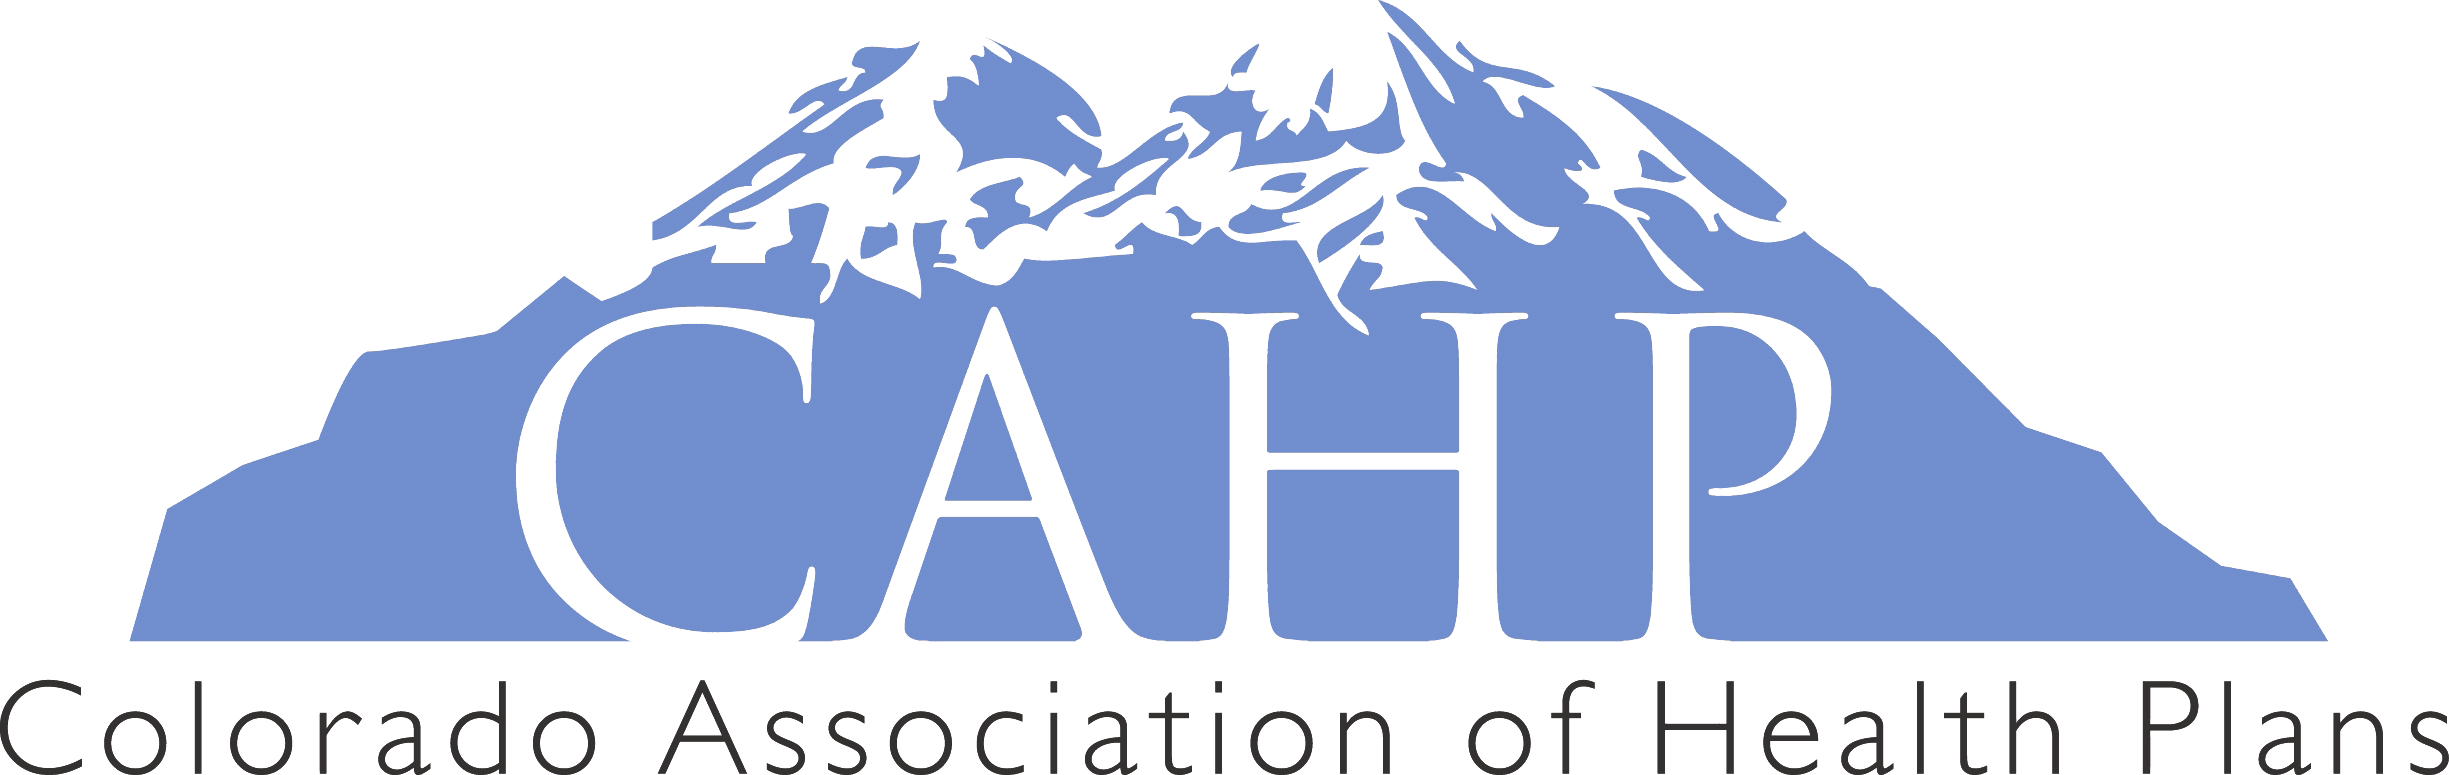 Cahp Logo - CAHP Leadership Association of Health Plans